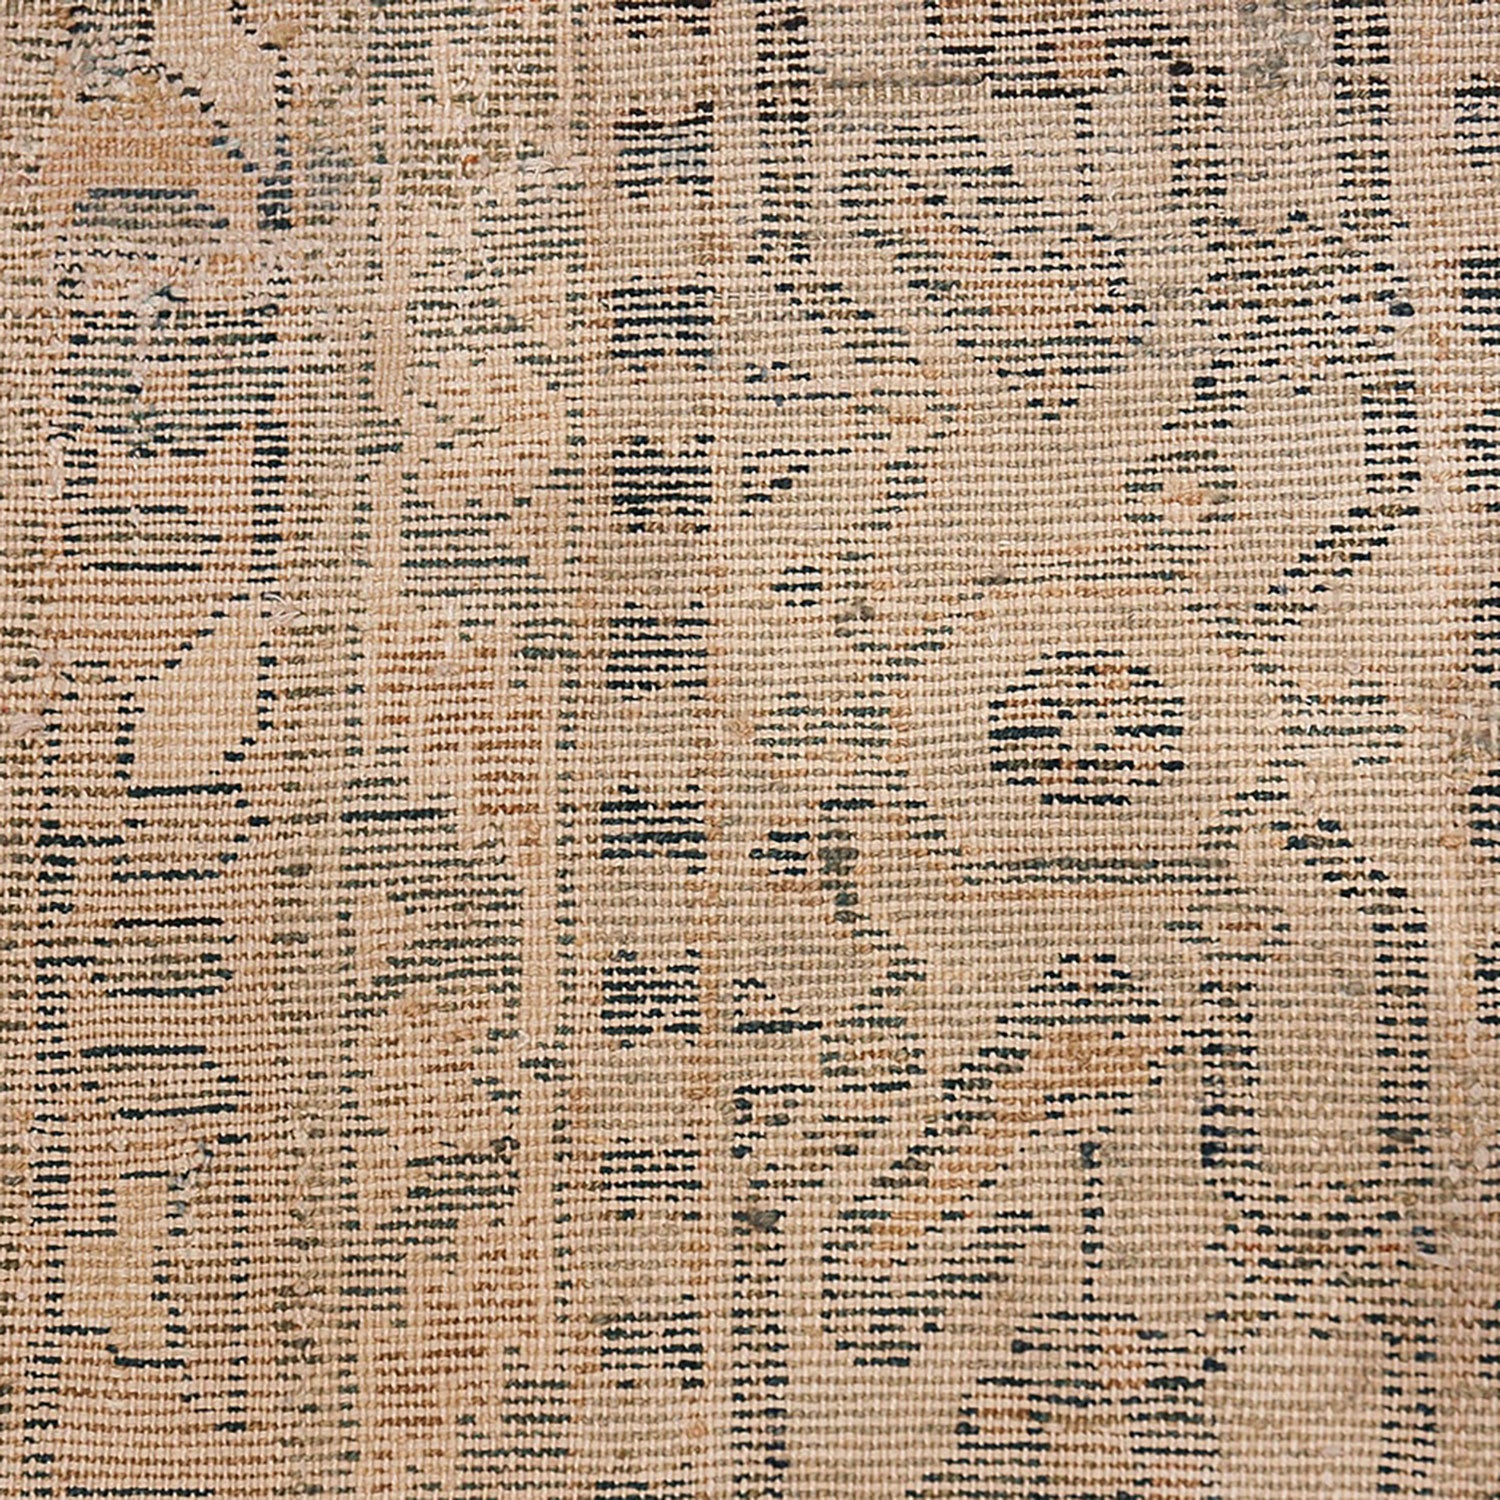 Intricate tribal-inspired tapestry showcases symmetrical dark geometric patterns on beige fabric.